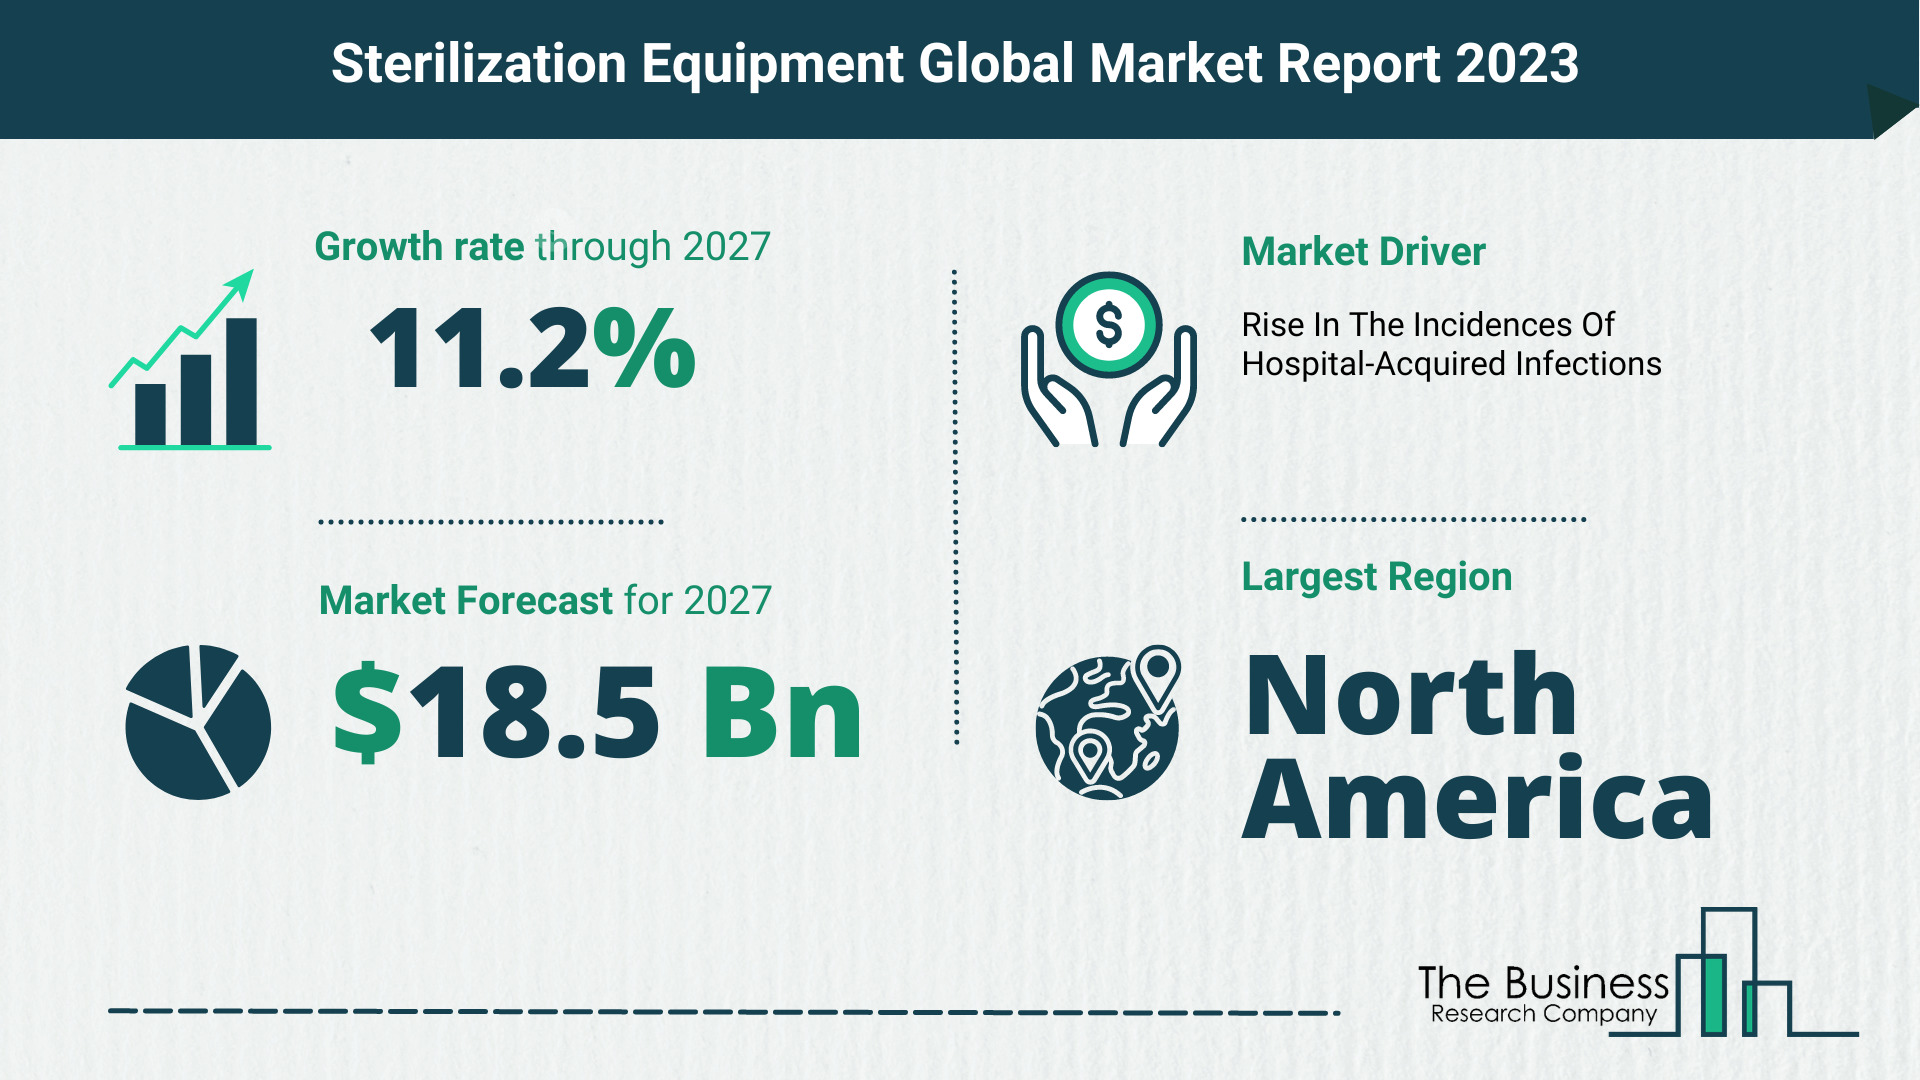 Global Sterilization Equipment Market Opportunities And Strategies 2023